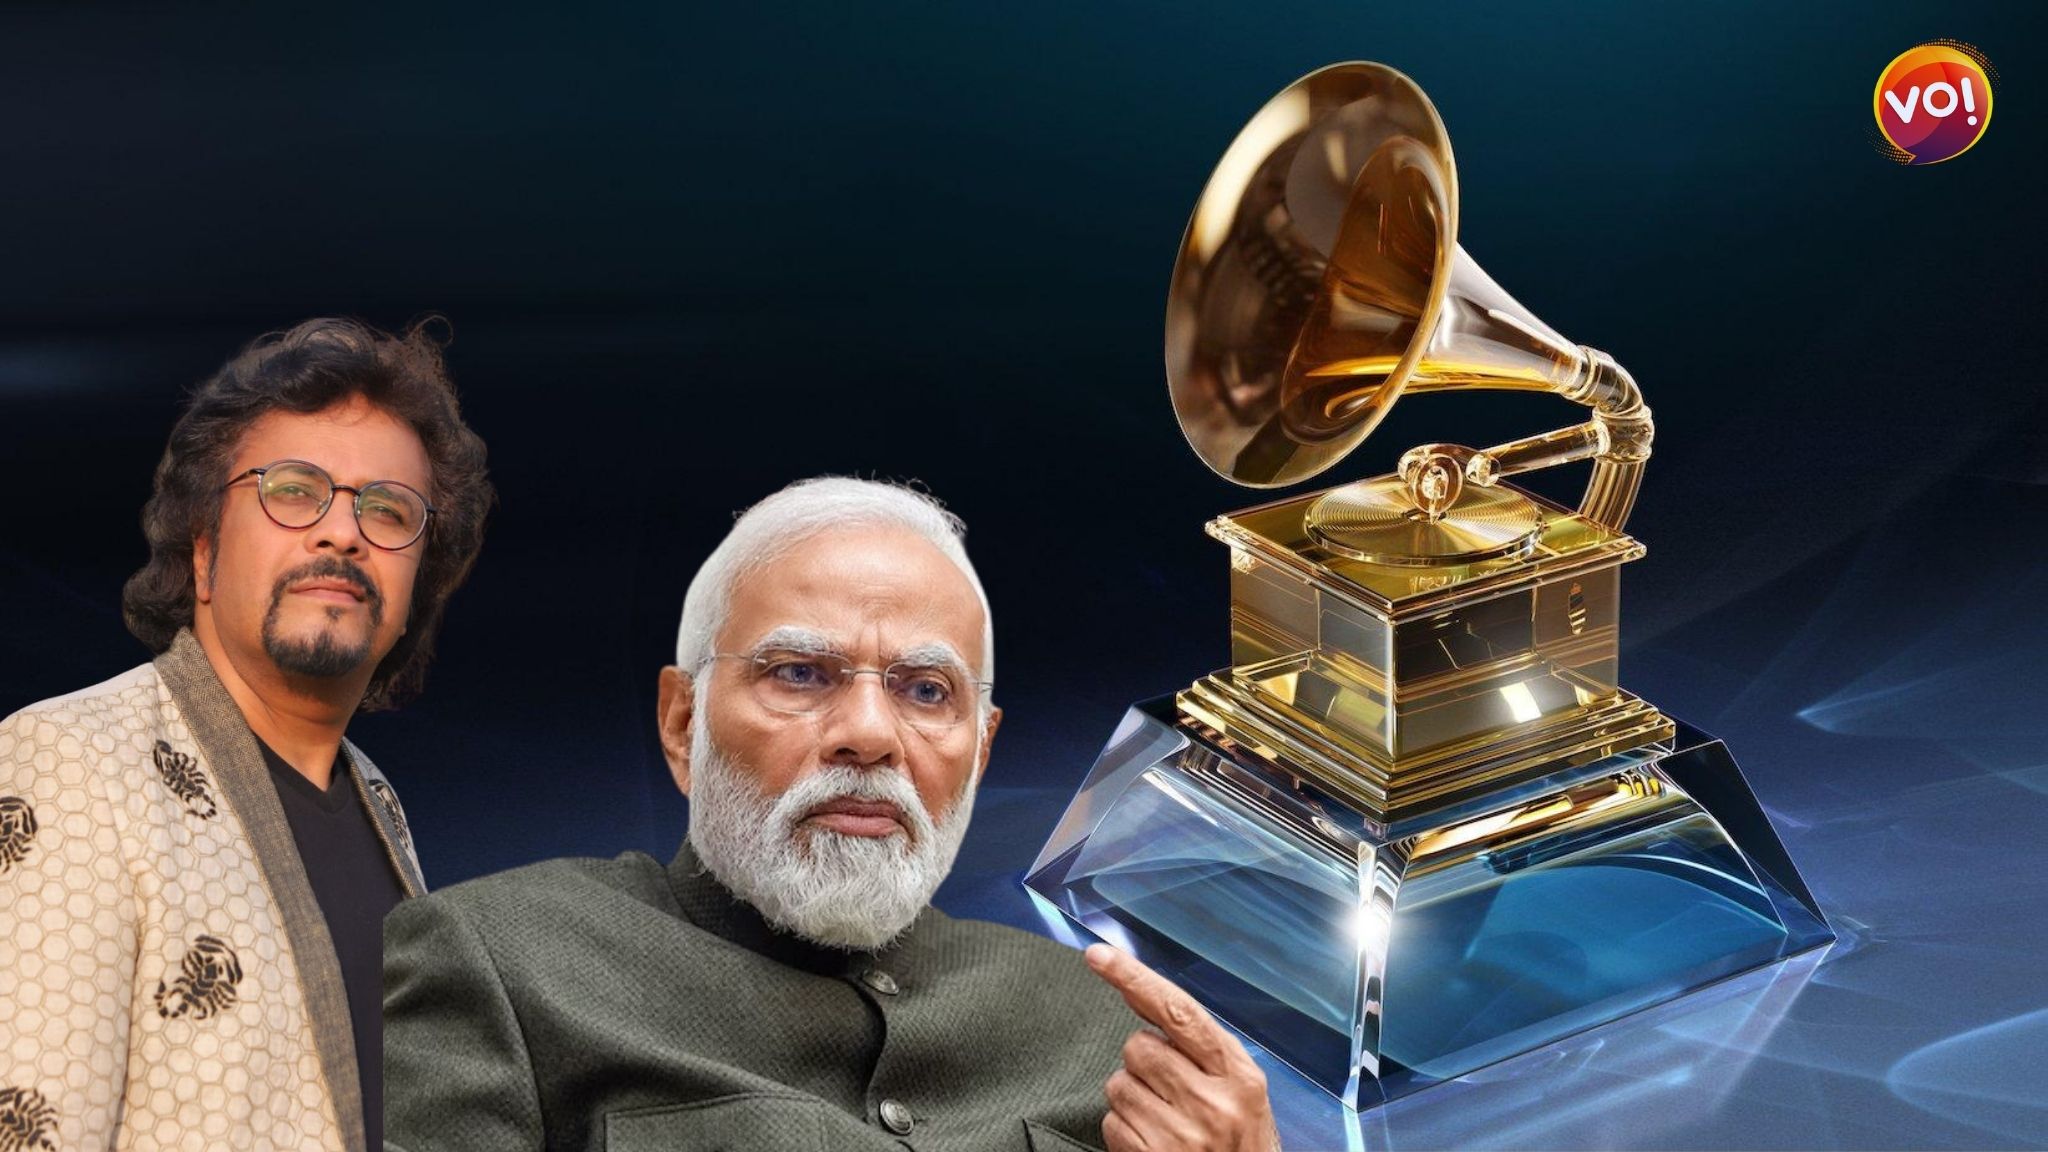 Tabla Maestro Bickram Ghosh Hails PM Modi’s Historic Grammy Nomination